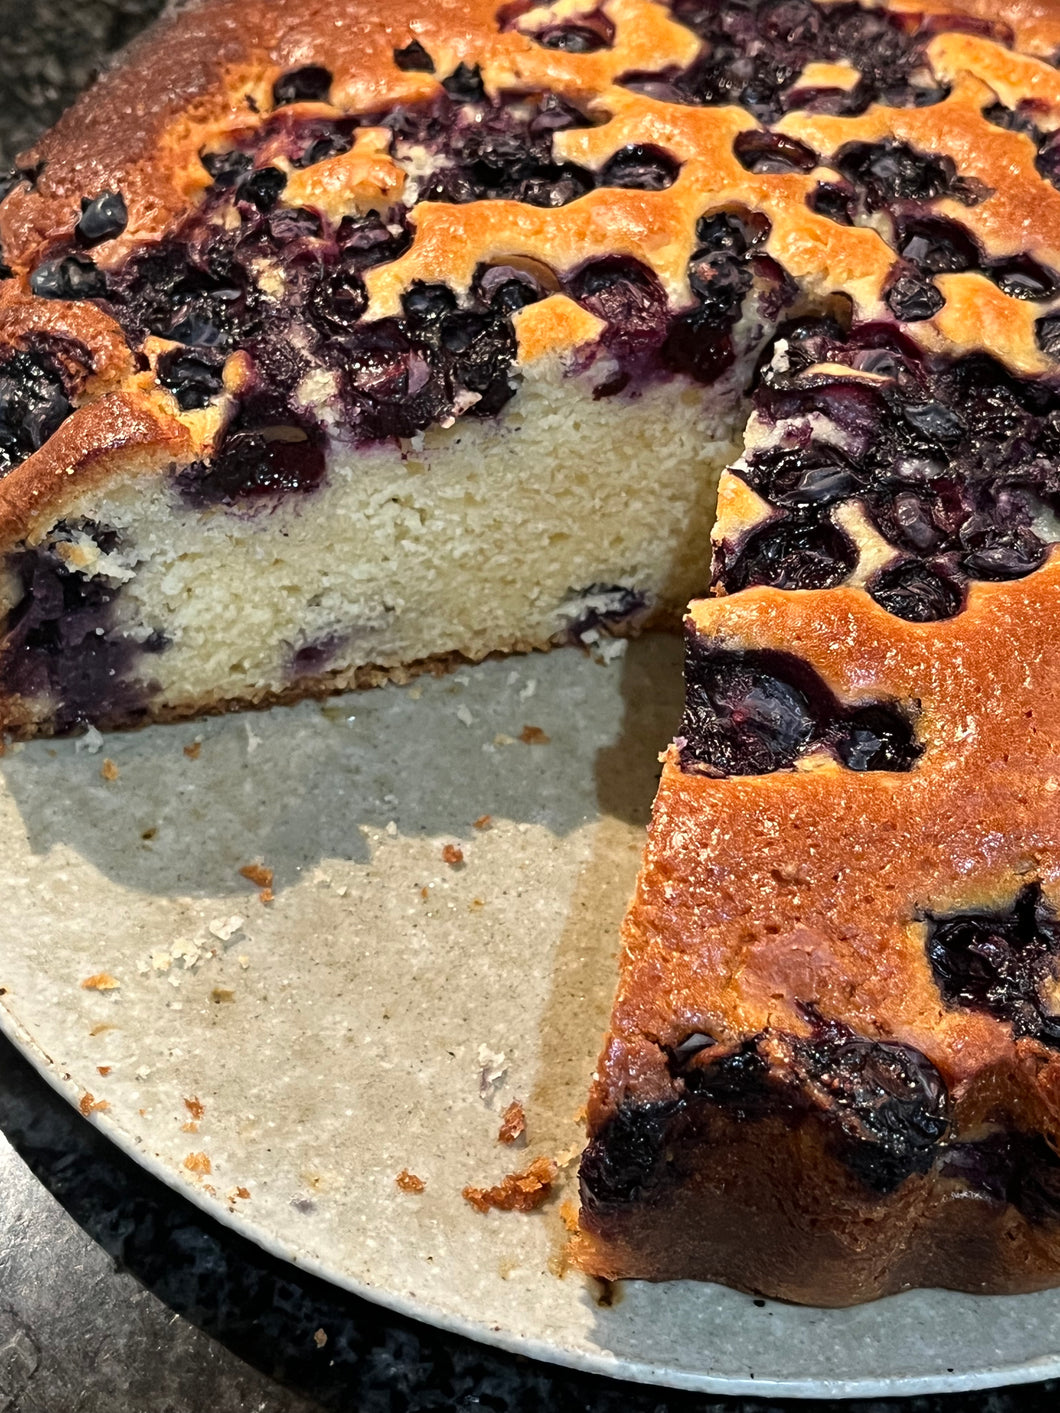 Homemade blueberry cake